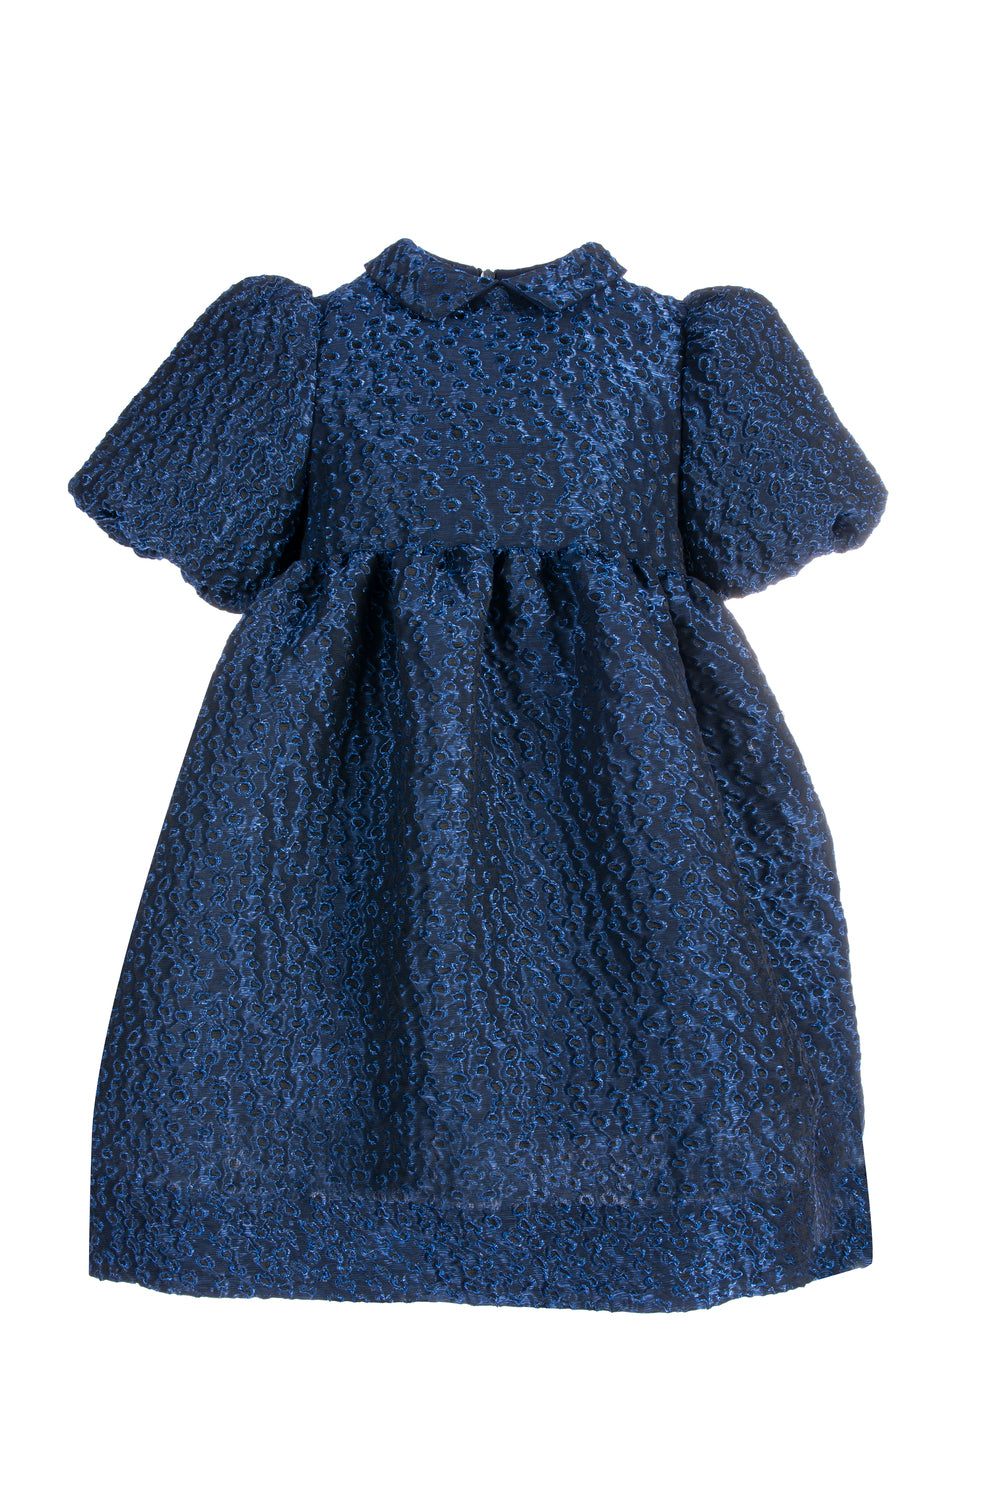 Mimisol Pufffy Sleeve Dress - Dark Blue